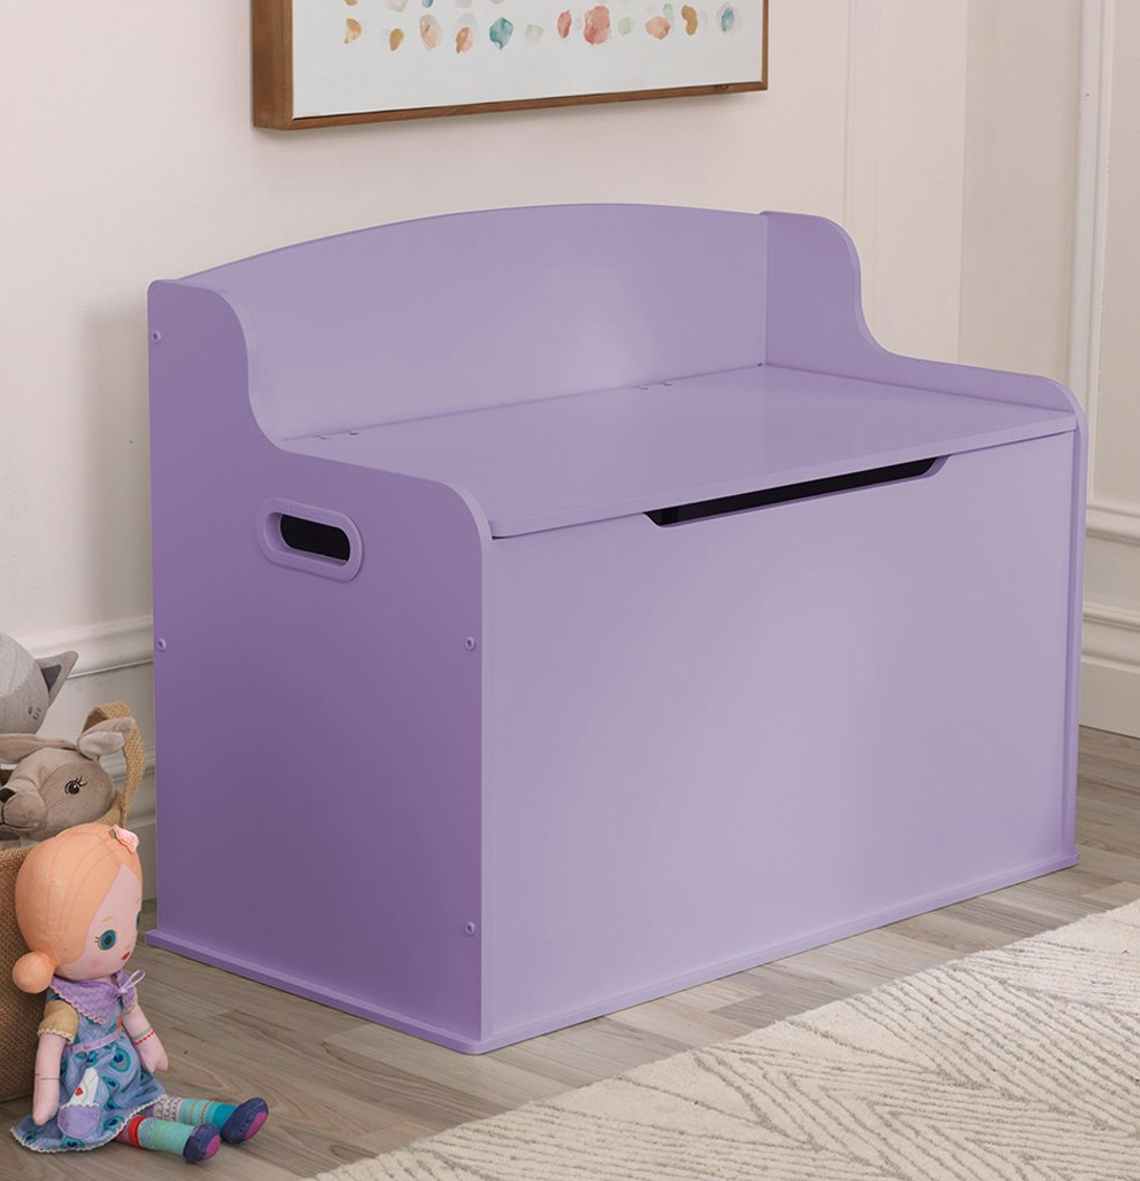  zulily-kidkraft-toy-box-lavender-092621